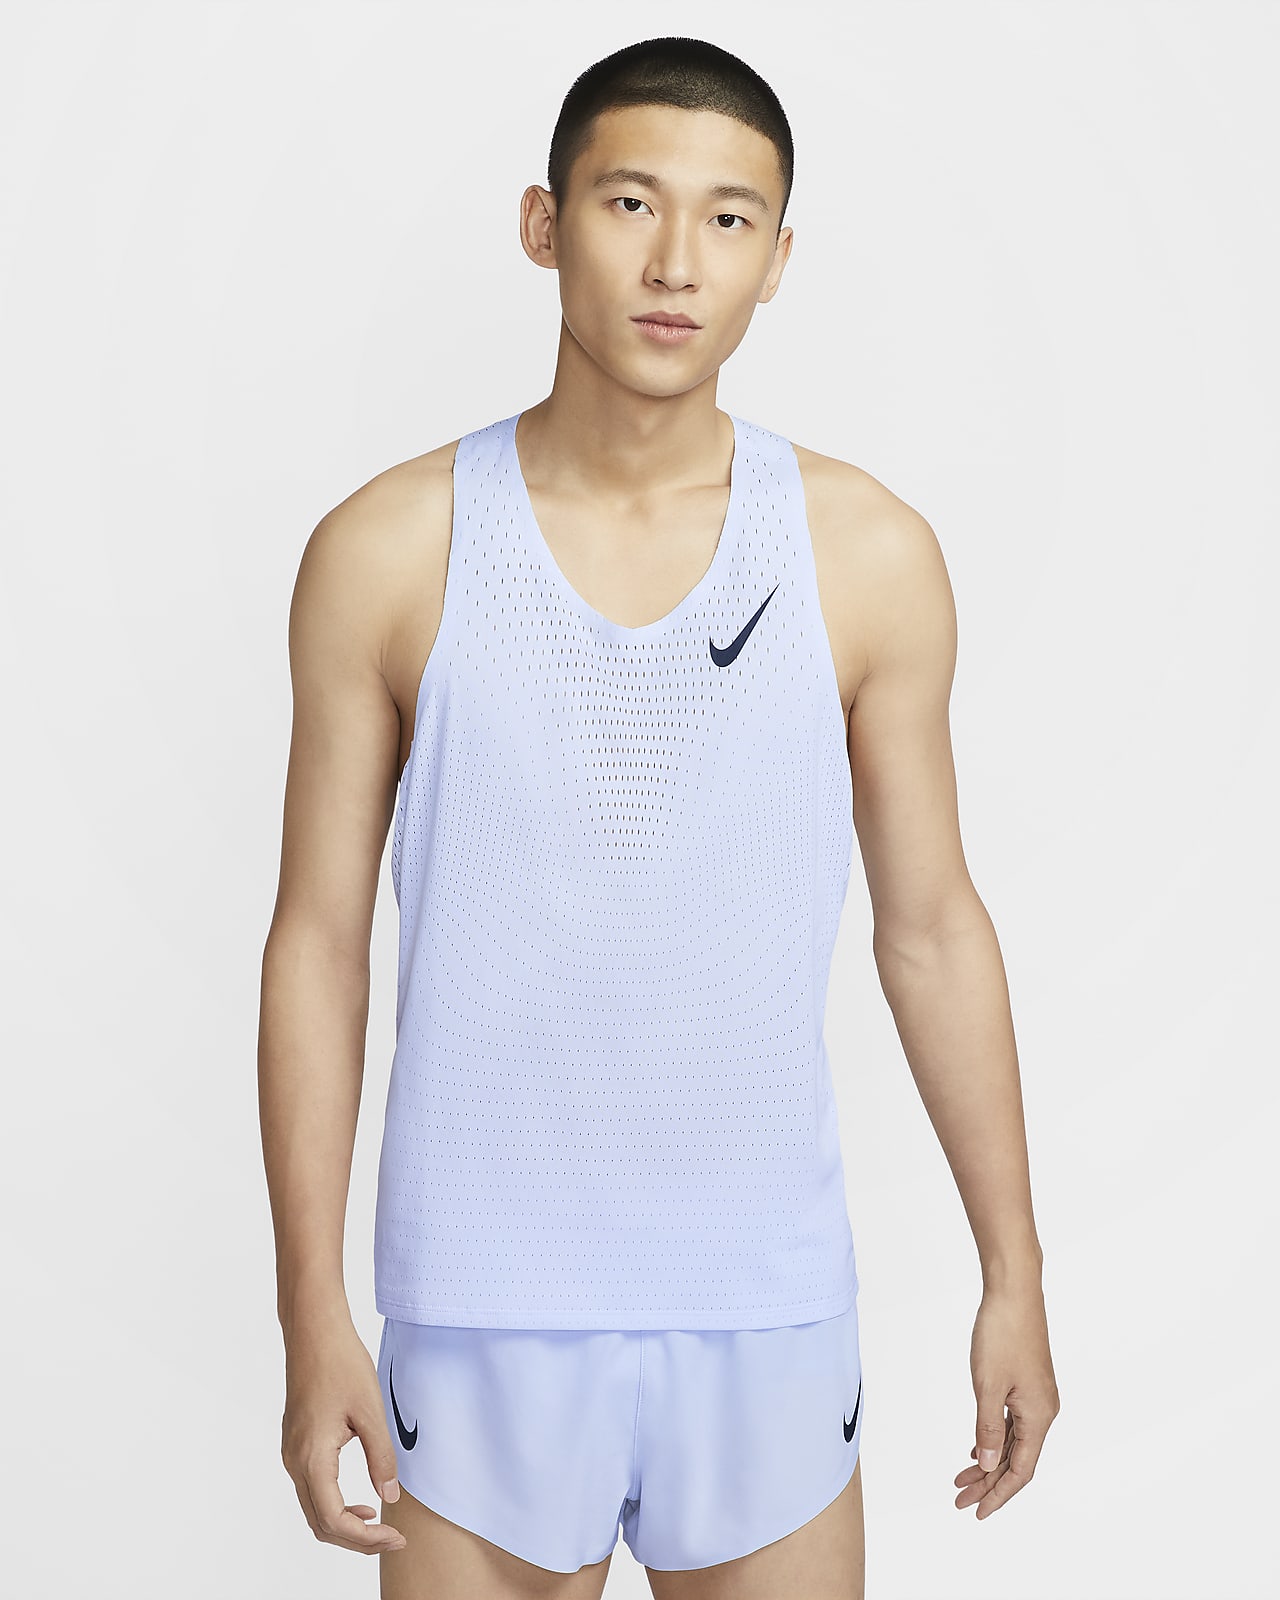 Nike AeroSwift Men's Dri-FIT ADV Running Vest